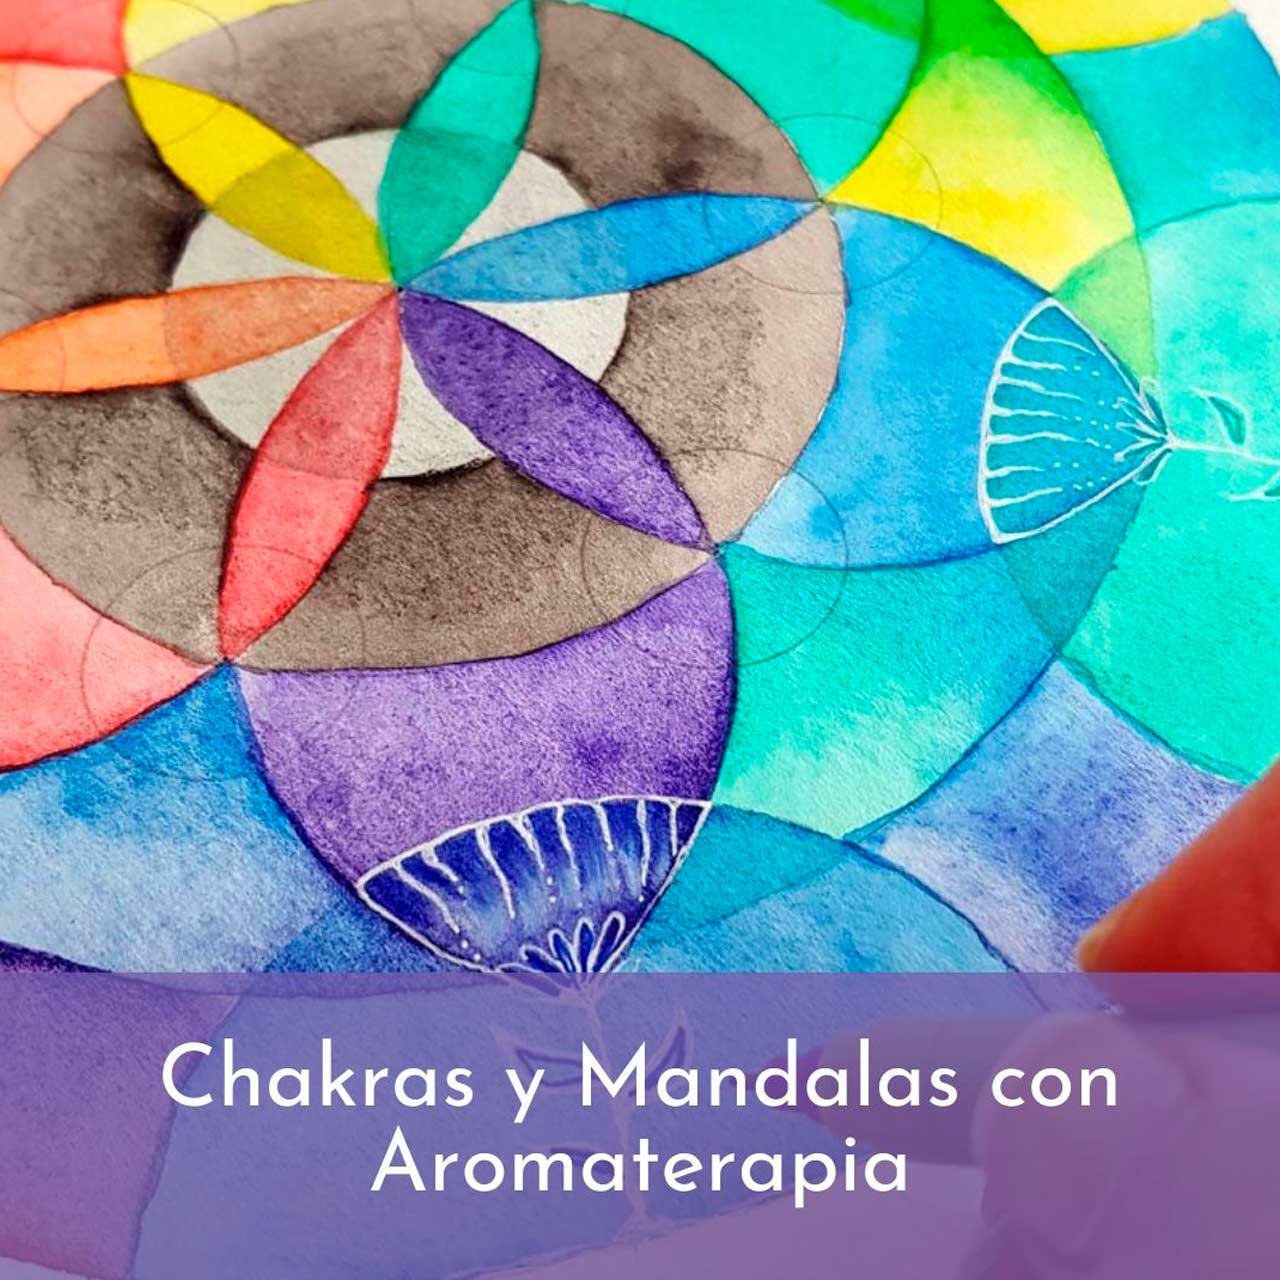 Chakras y Mandalas con Aromaterapia